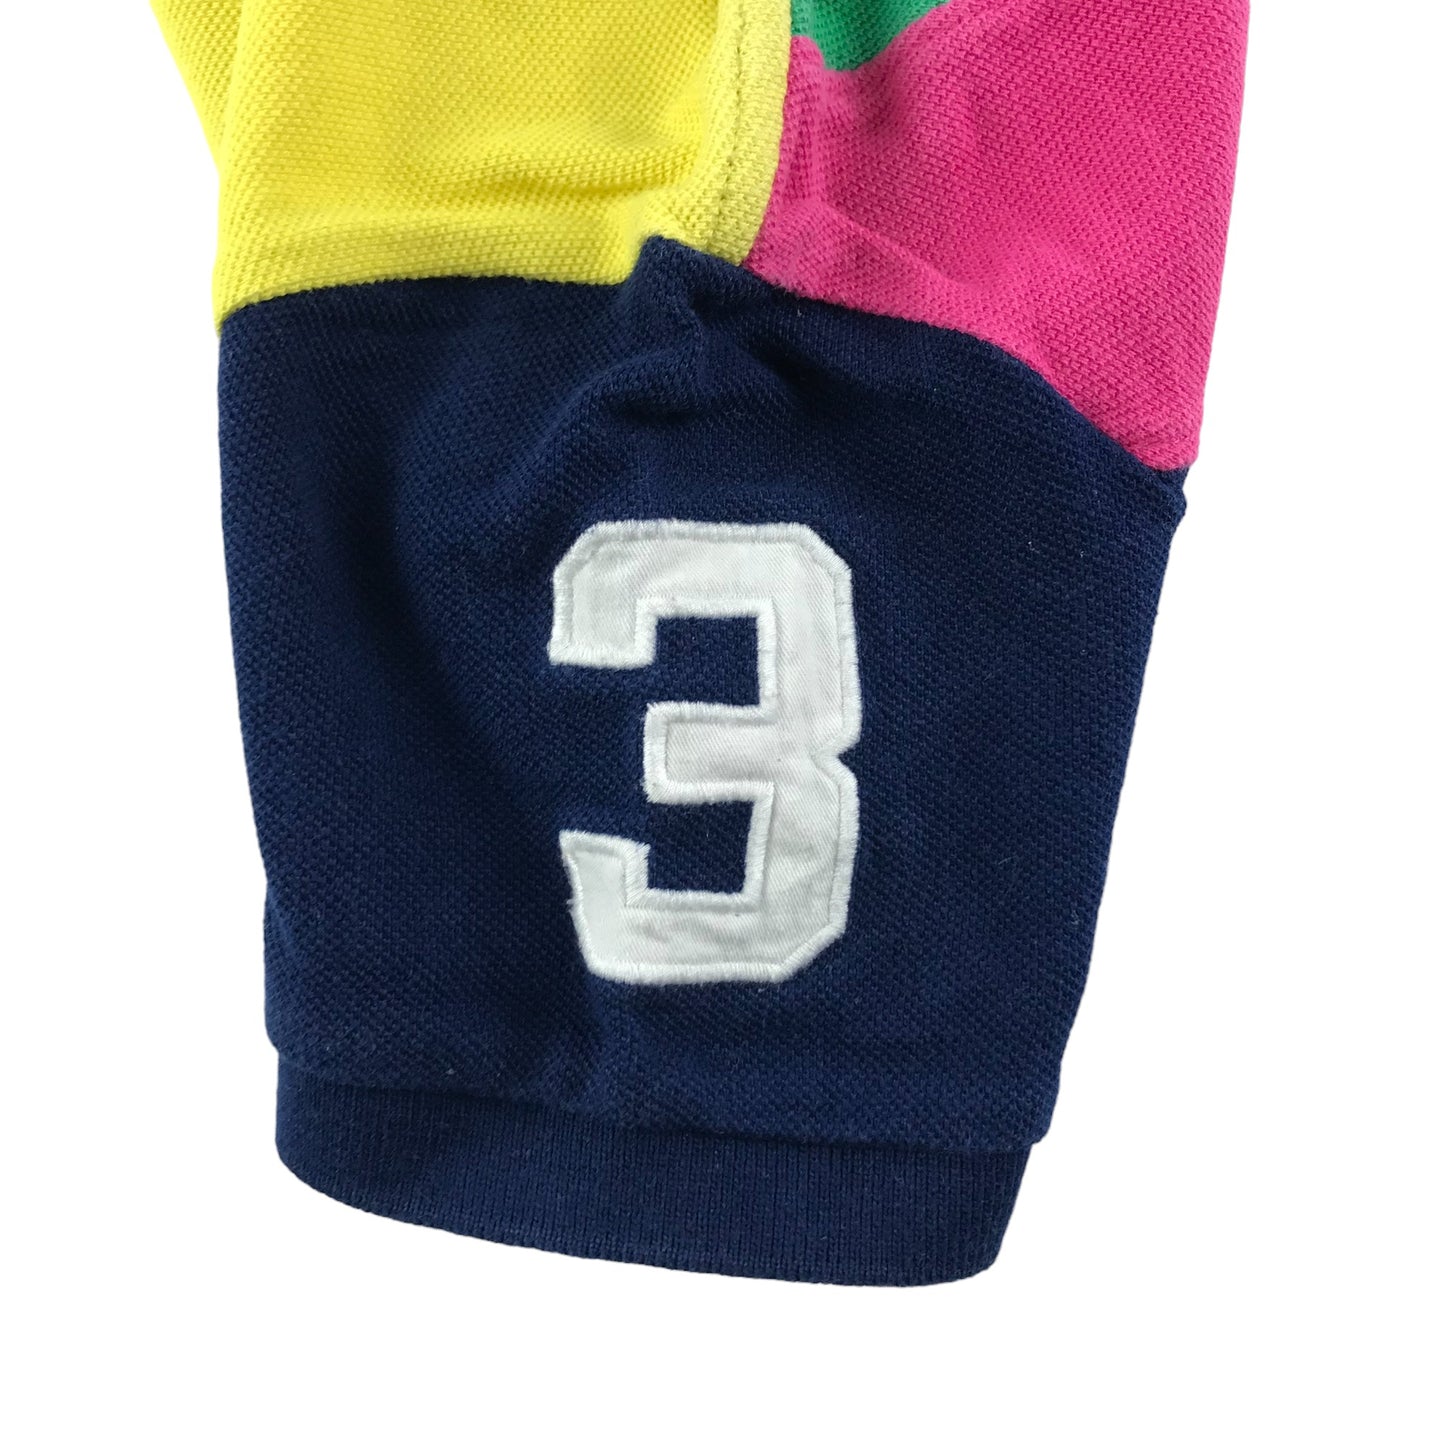 Ralph Lauren Polo Shirt Age 5 Navy Pink Green Yellow Panelled Short Sleeve Cotton